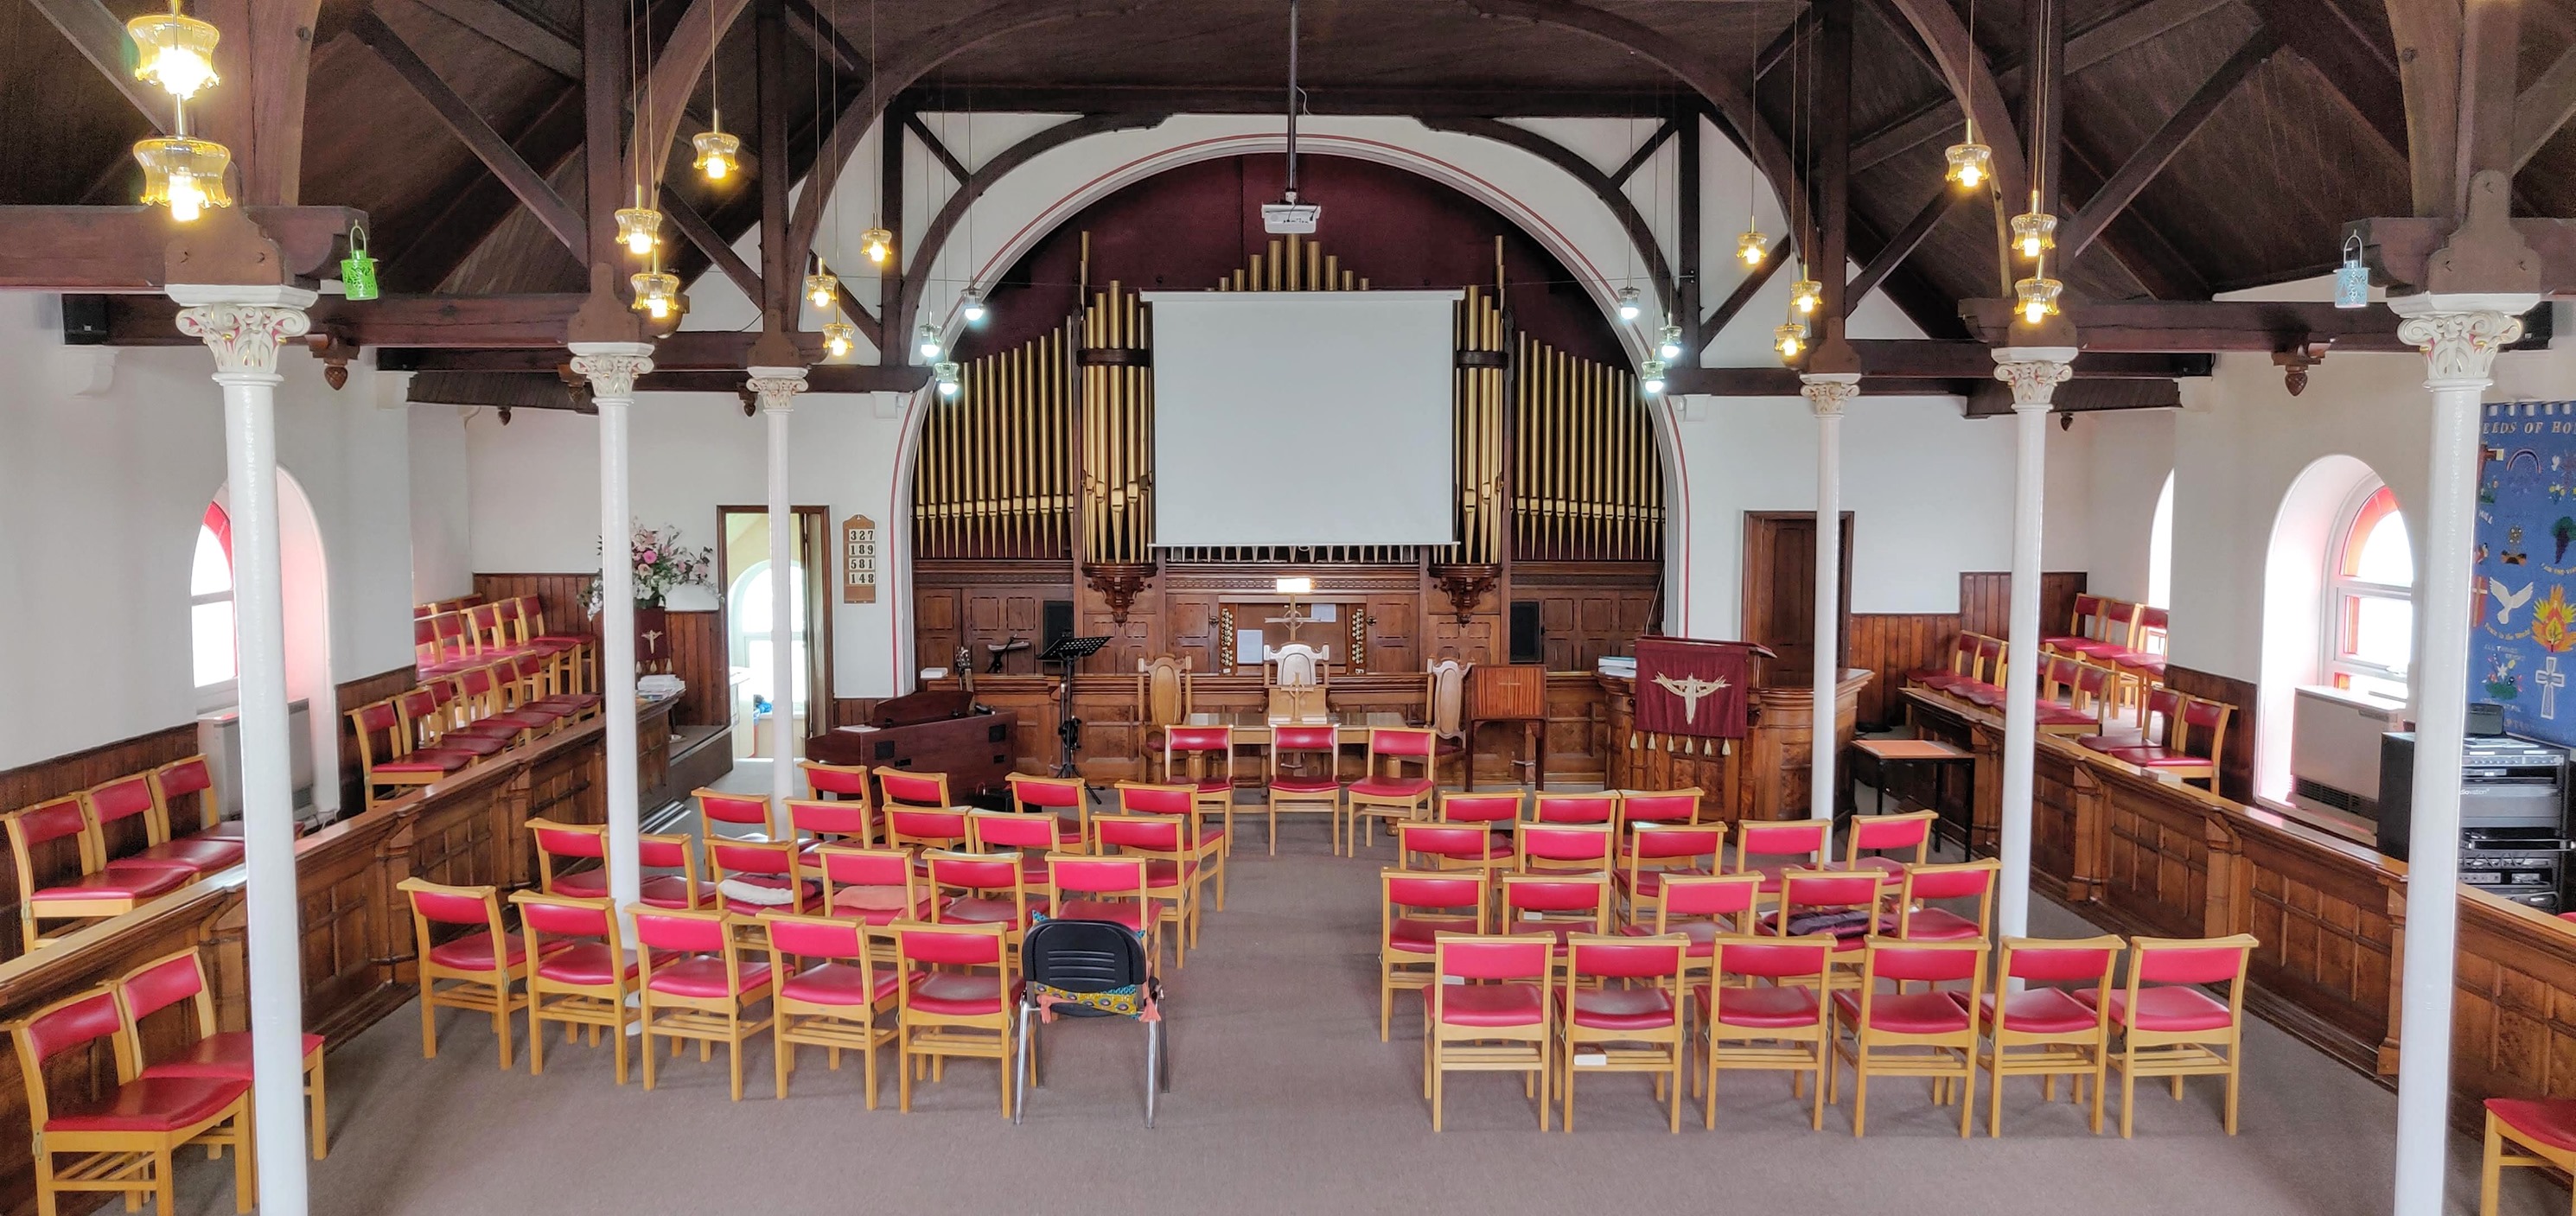 inside church before